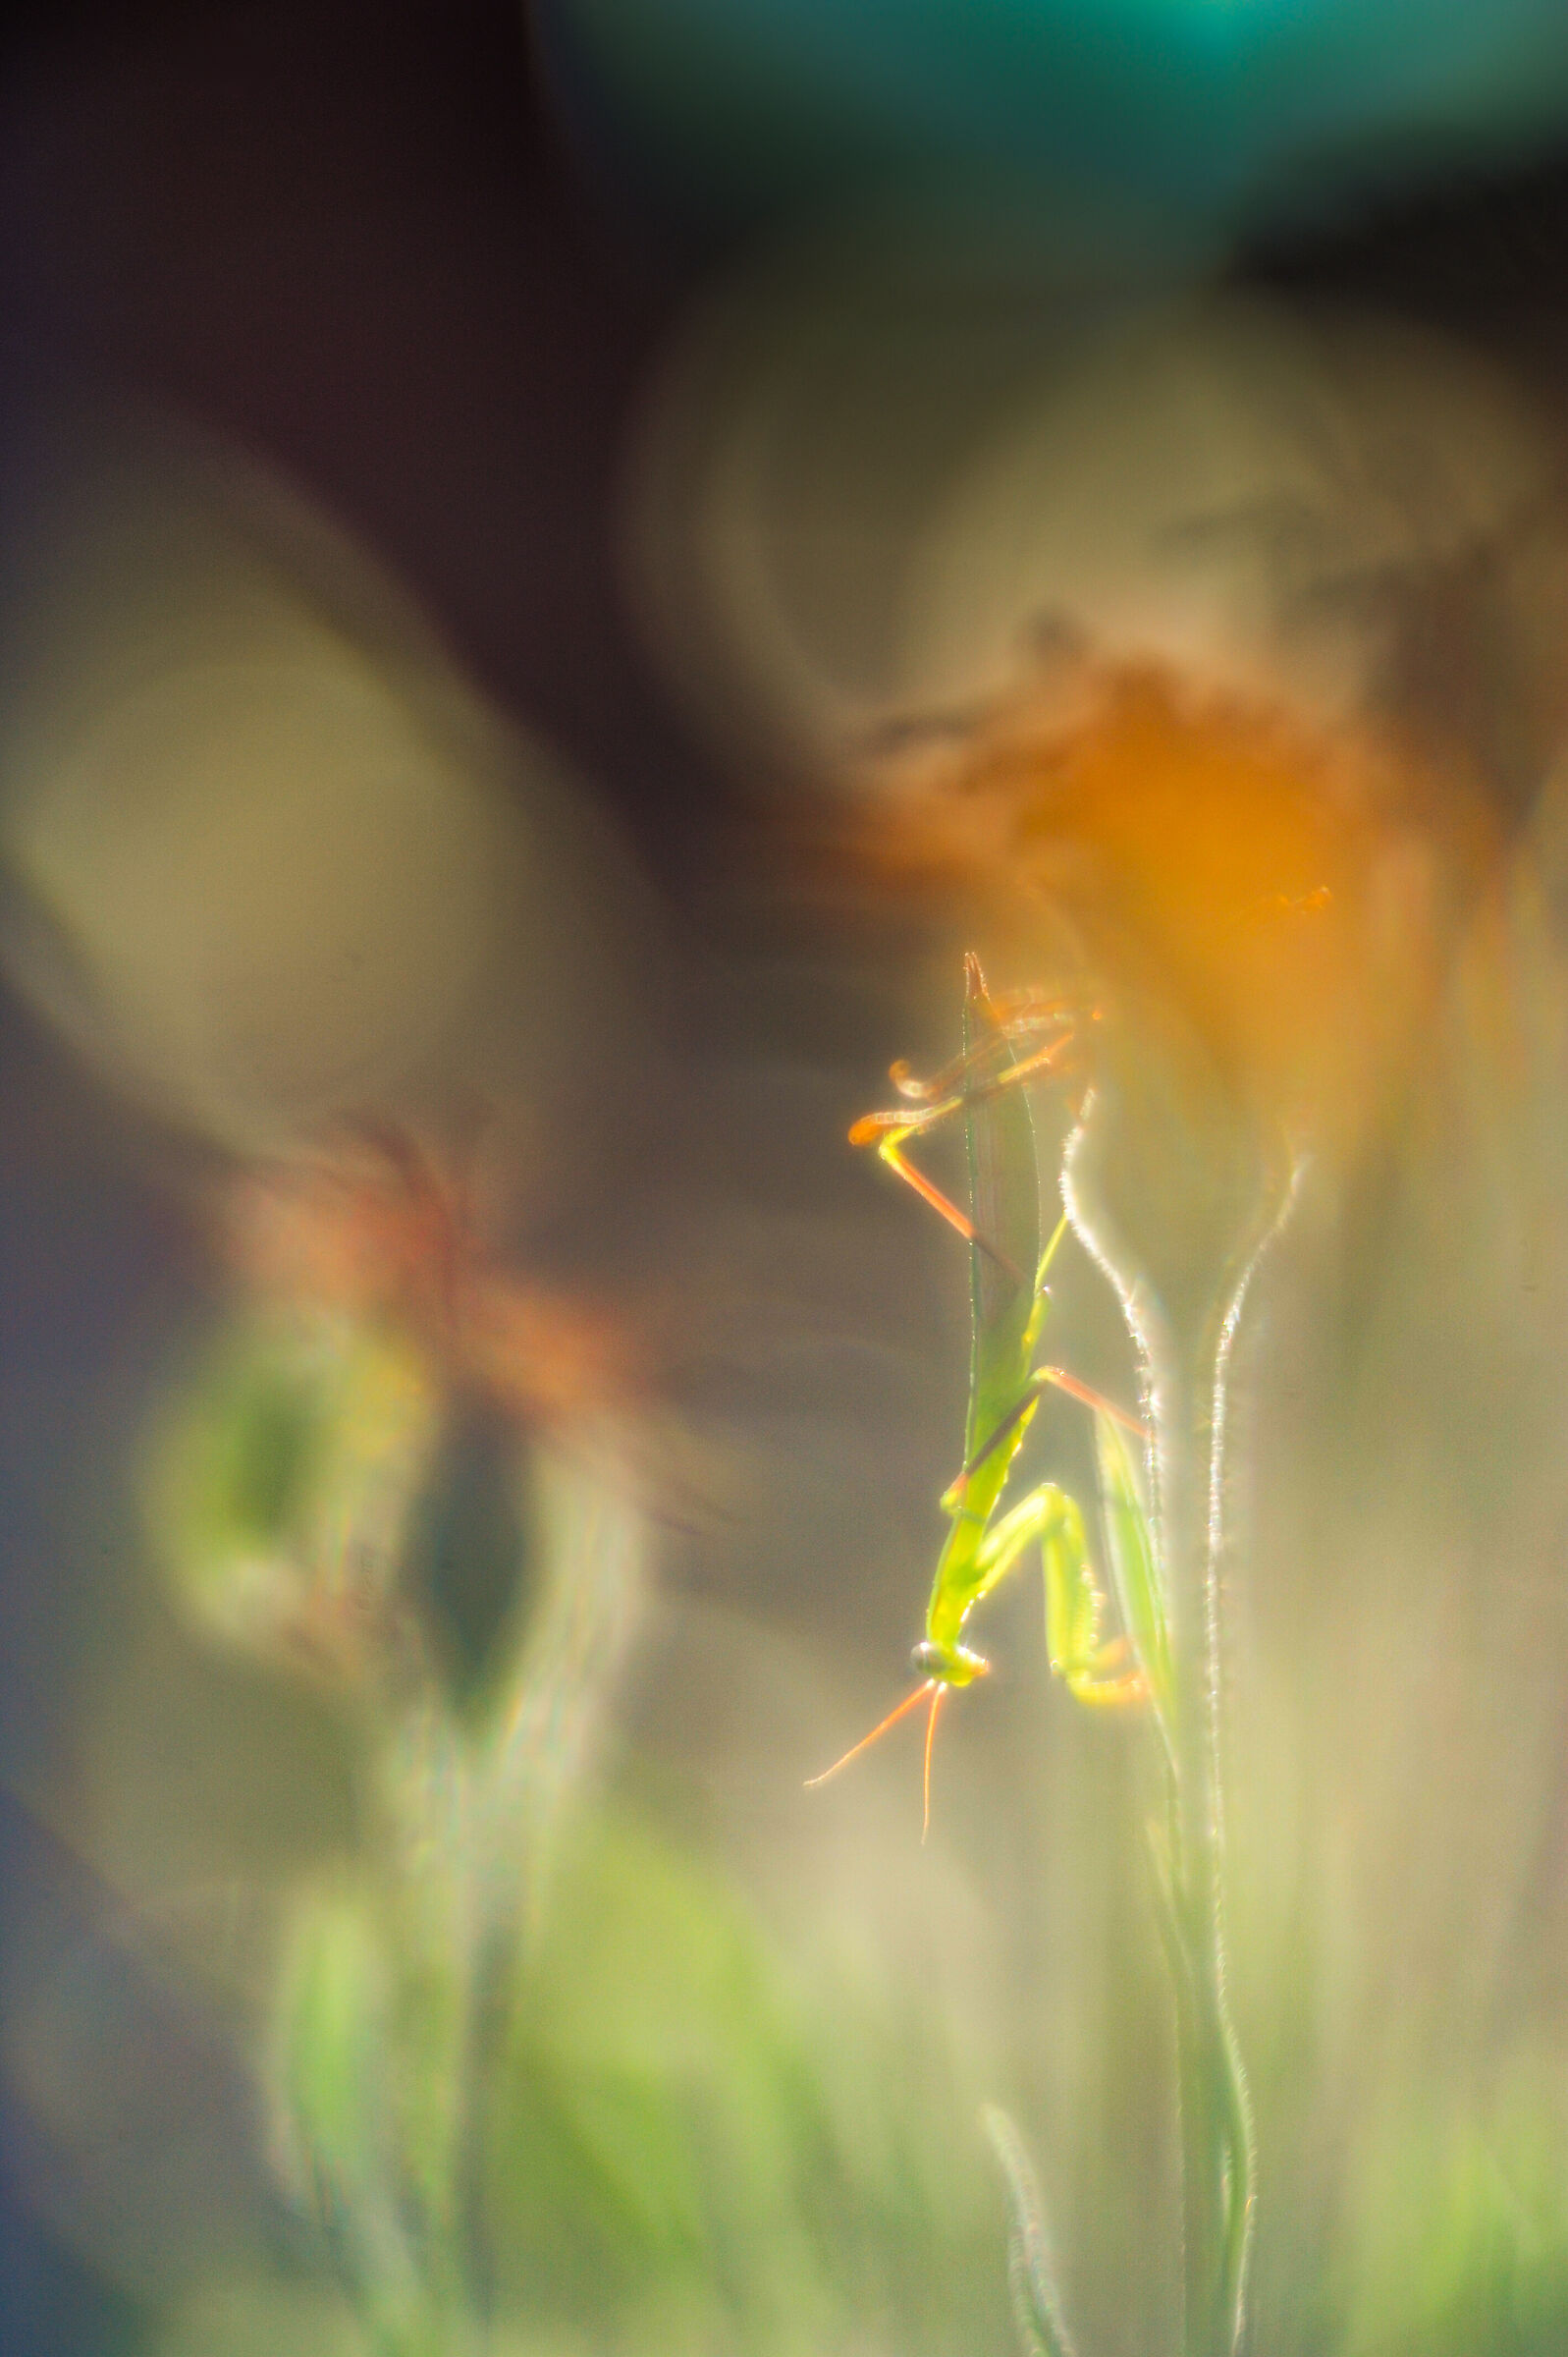 Small mantis on Dandelion...